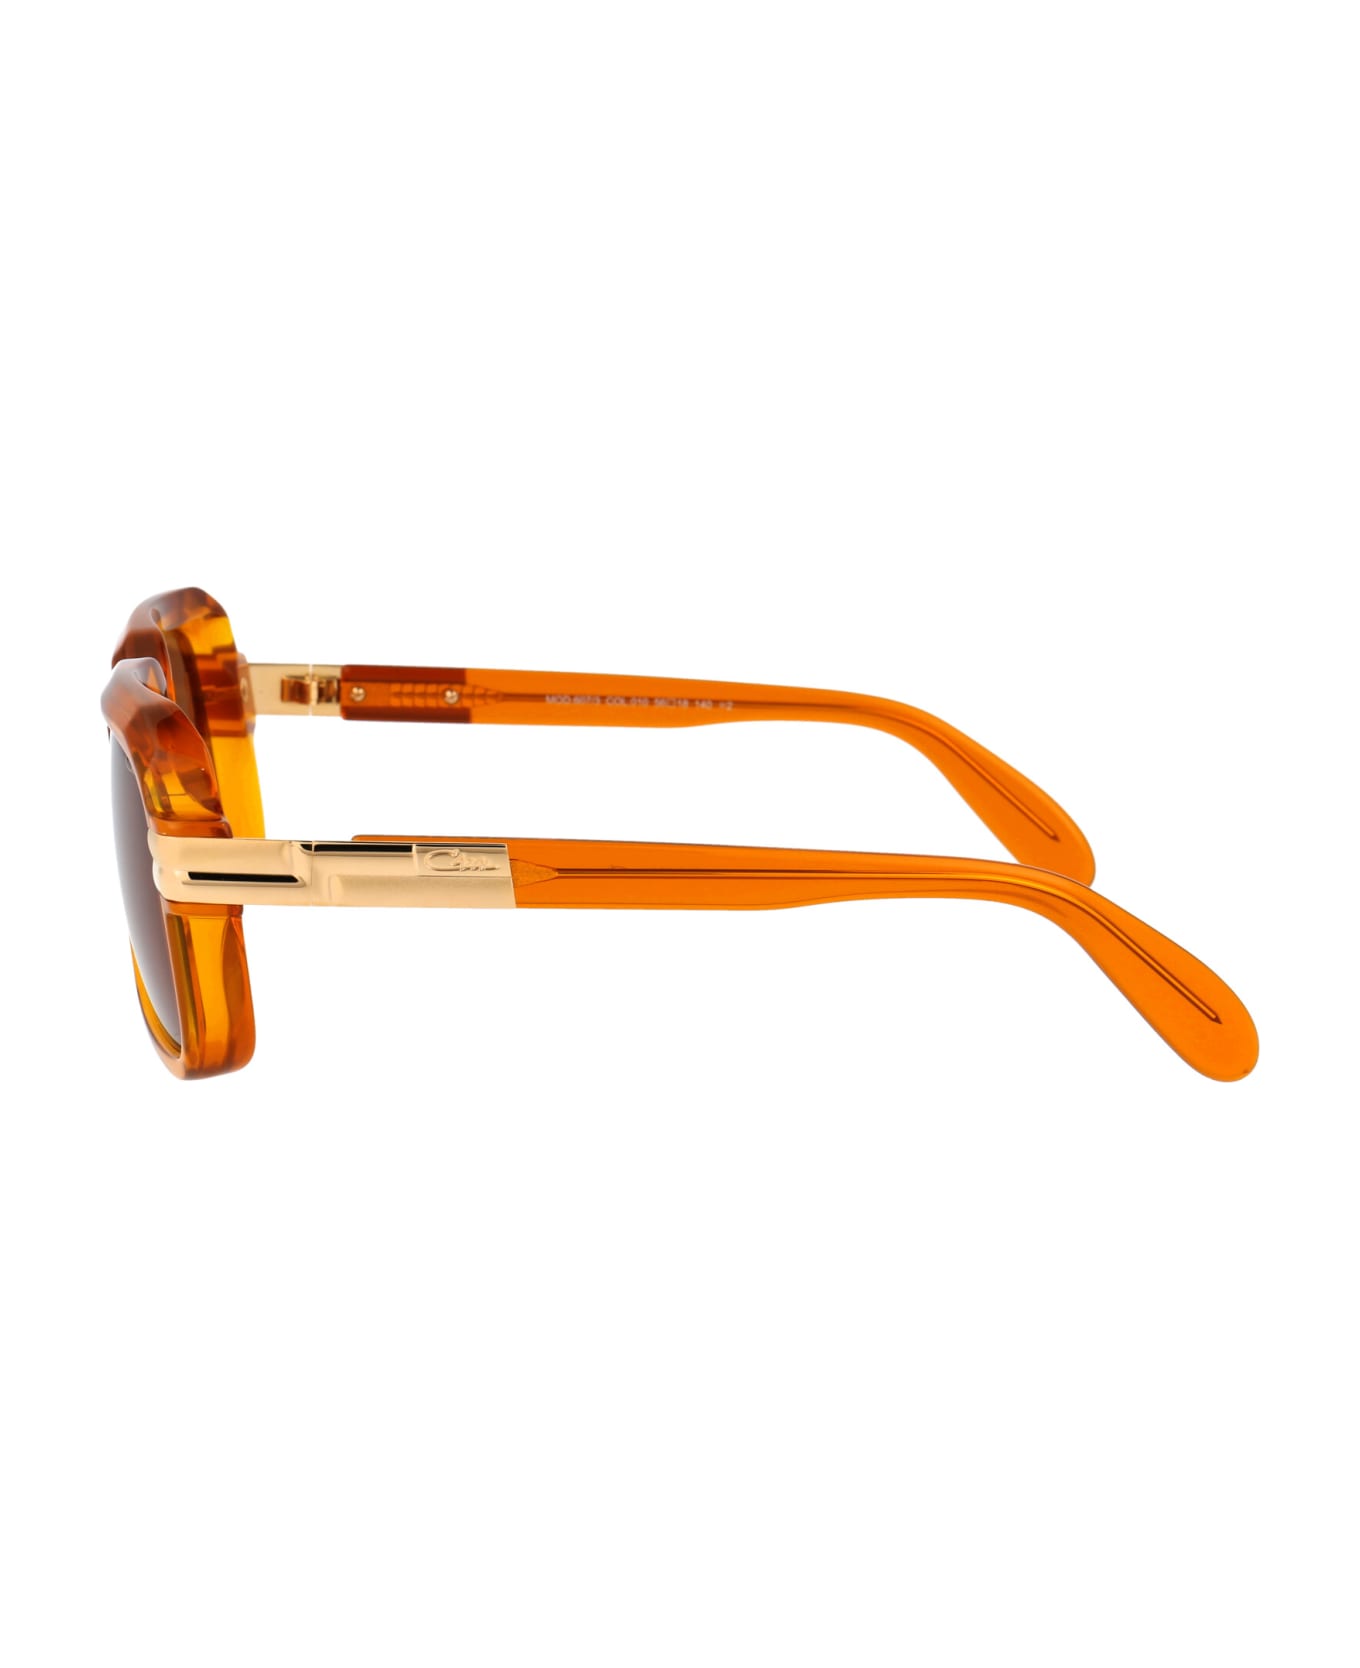 Cazal Mod. 607/3 Sunglasses - 010 ORANGE サングラス